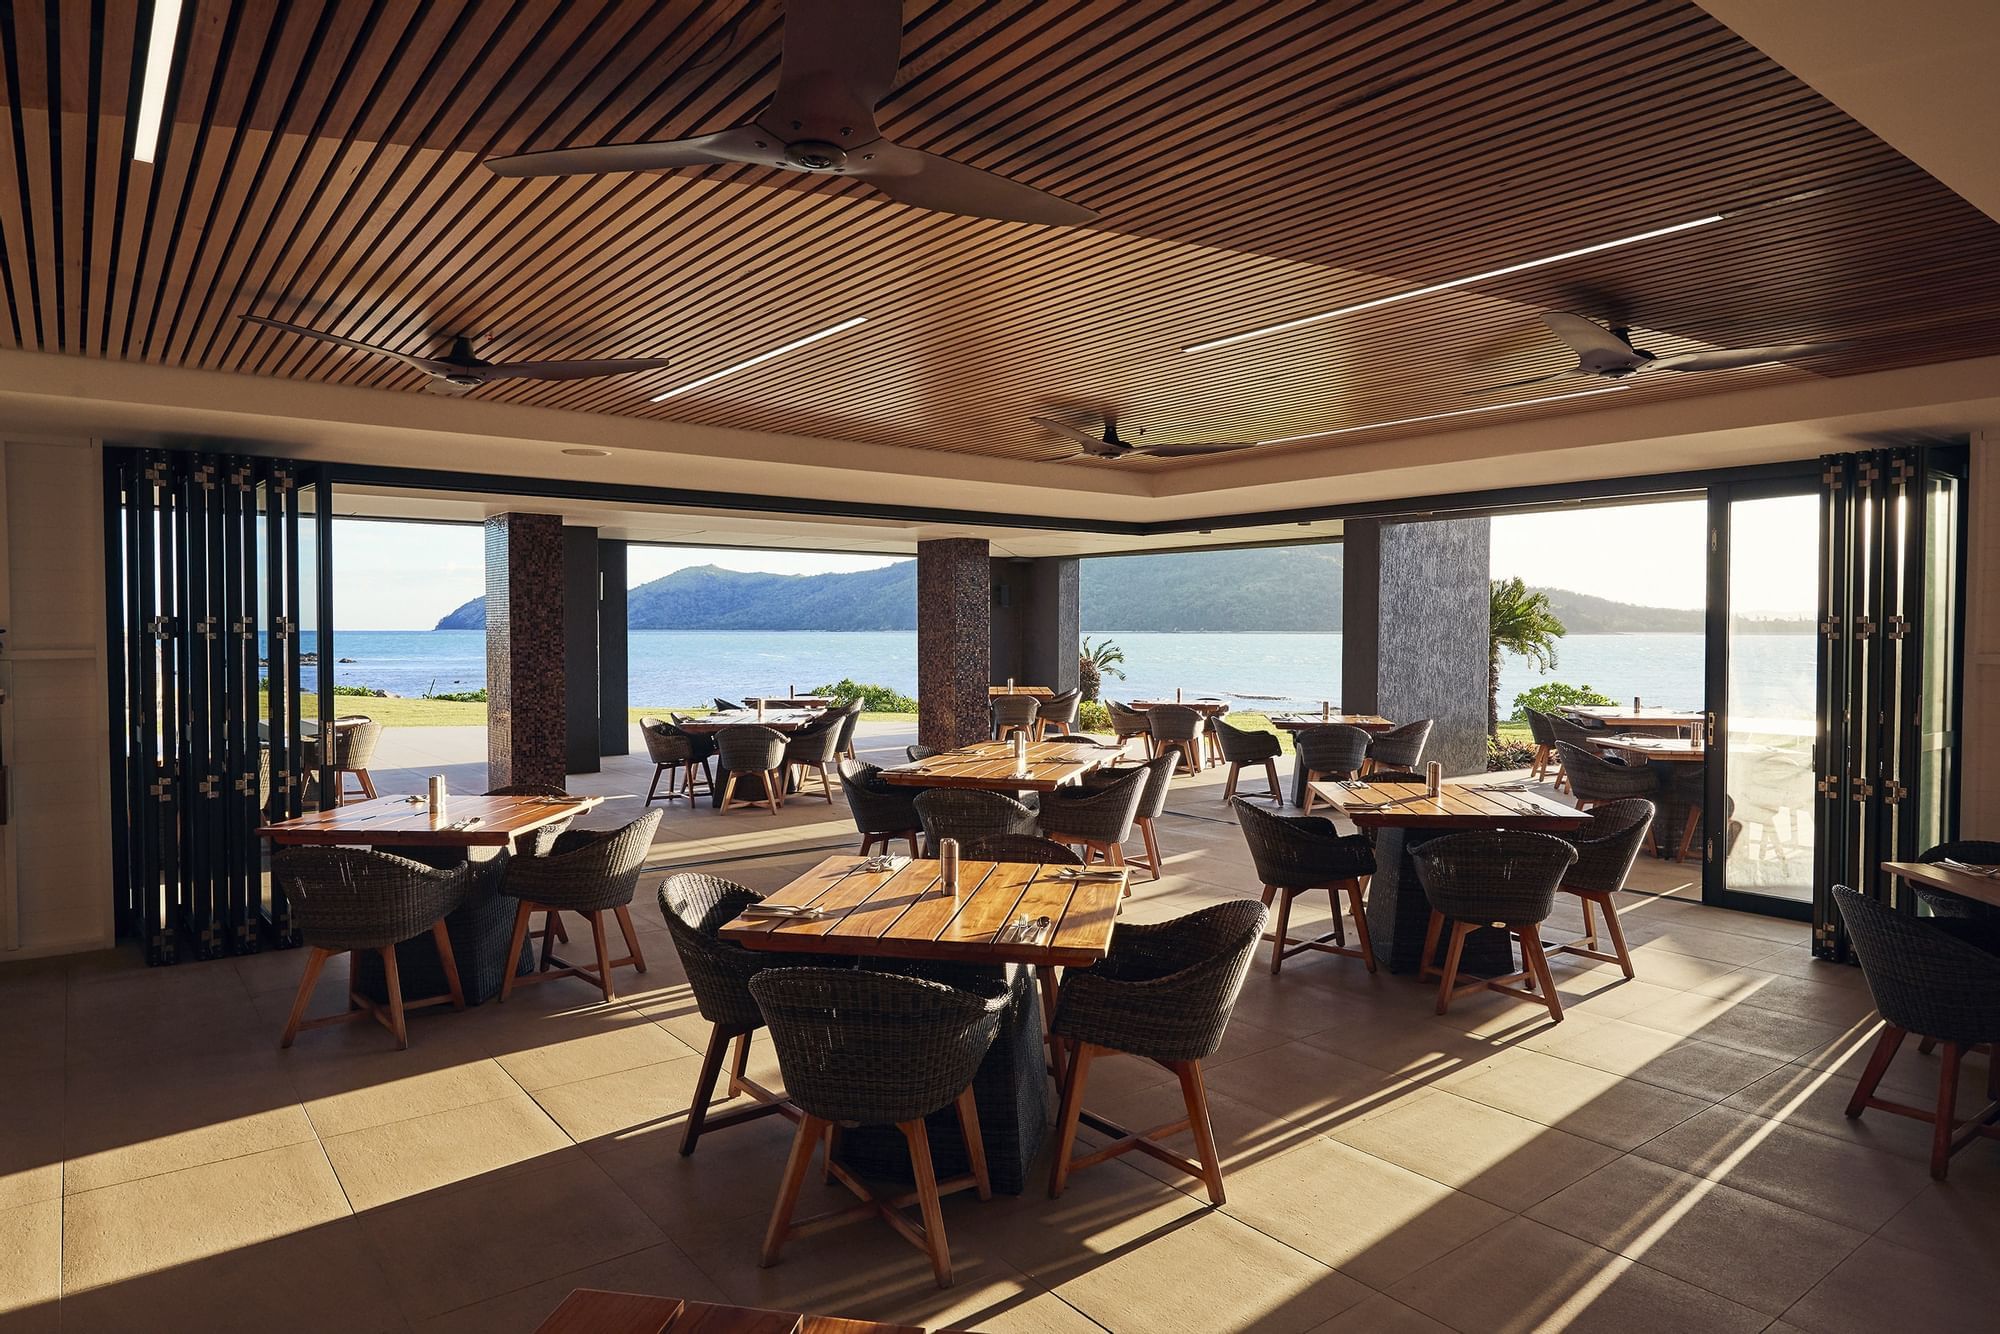 Inkstone Kitchen & Bar with sea view at Daydream Island Resort